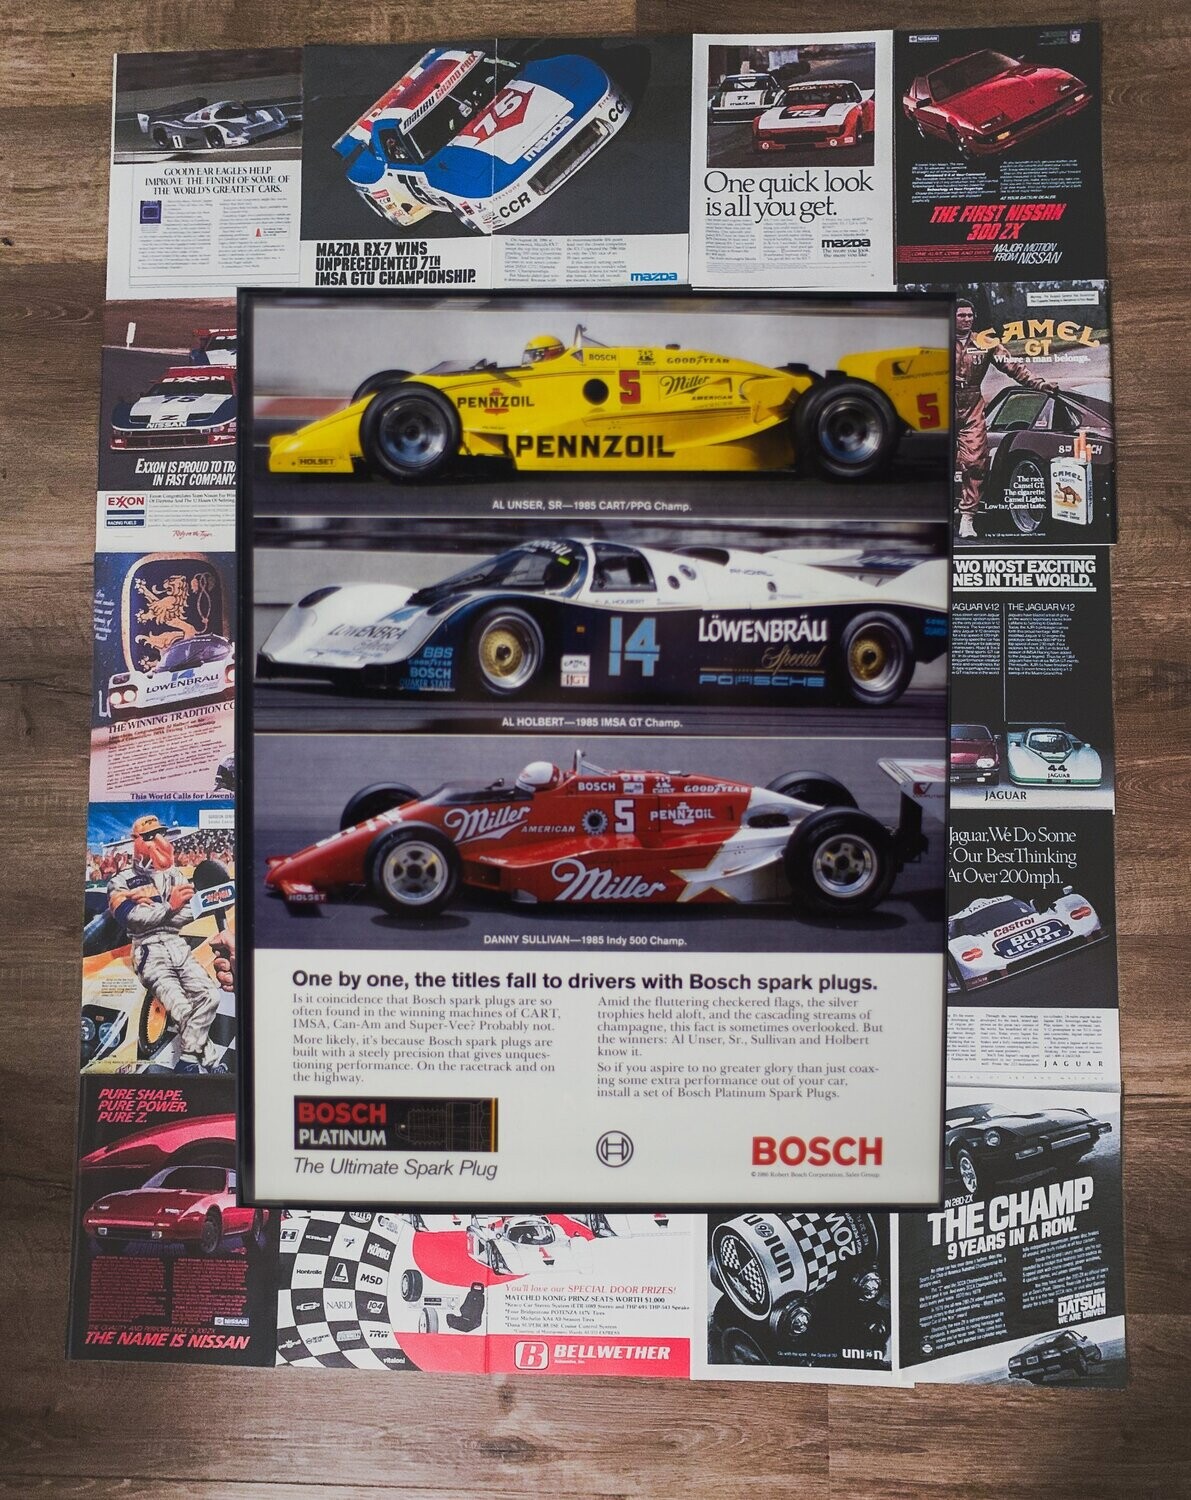 IMSA / Motorsport Collection - Day 18 - Bosch